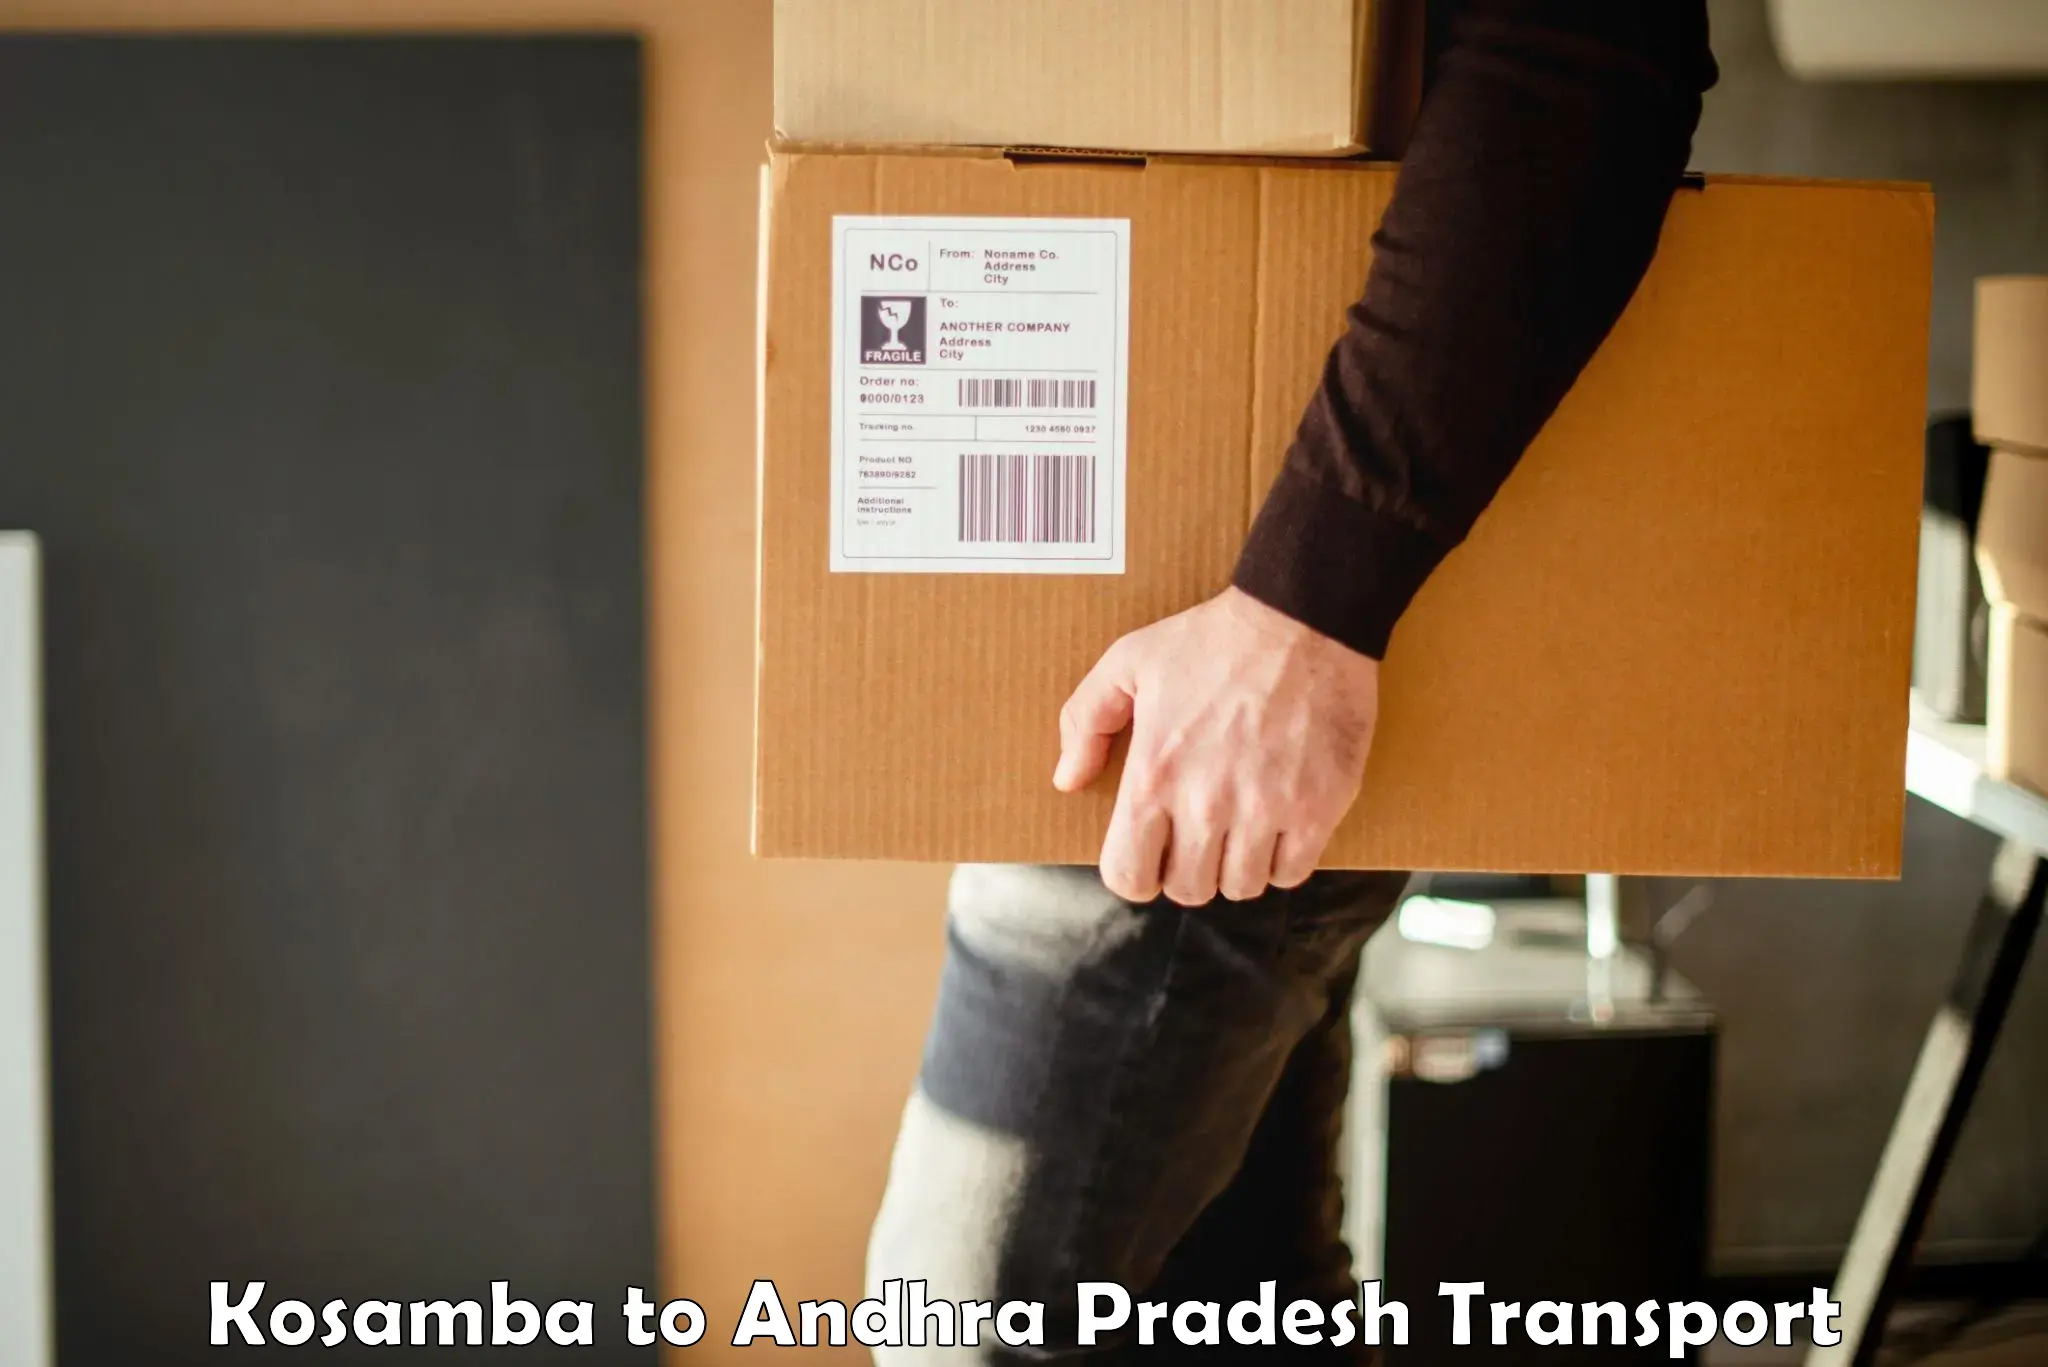 Air freight transport services Kosamba to Tripuranthakam